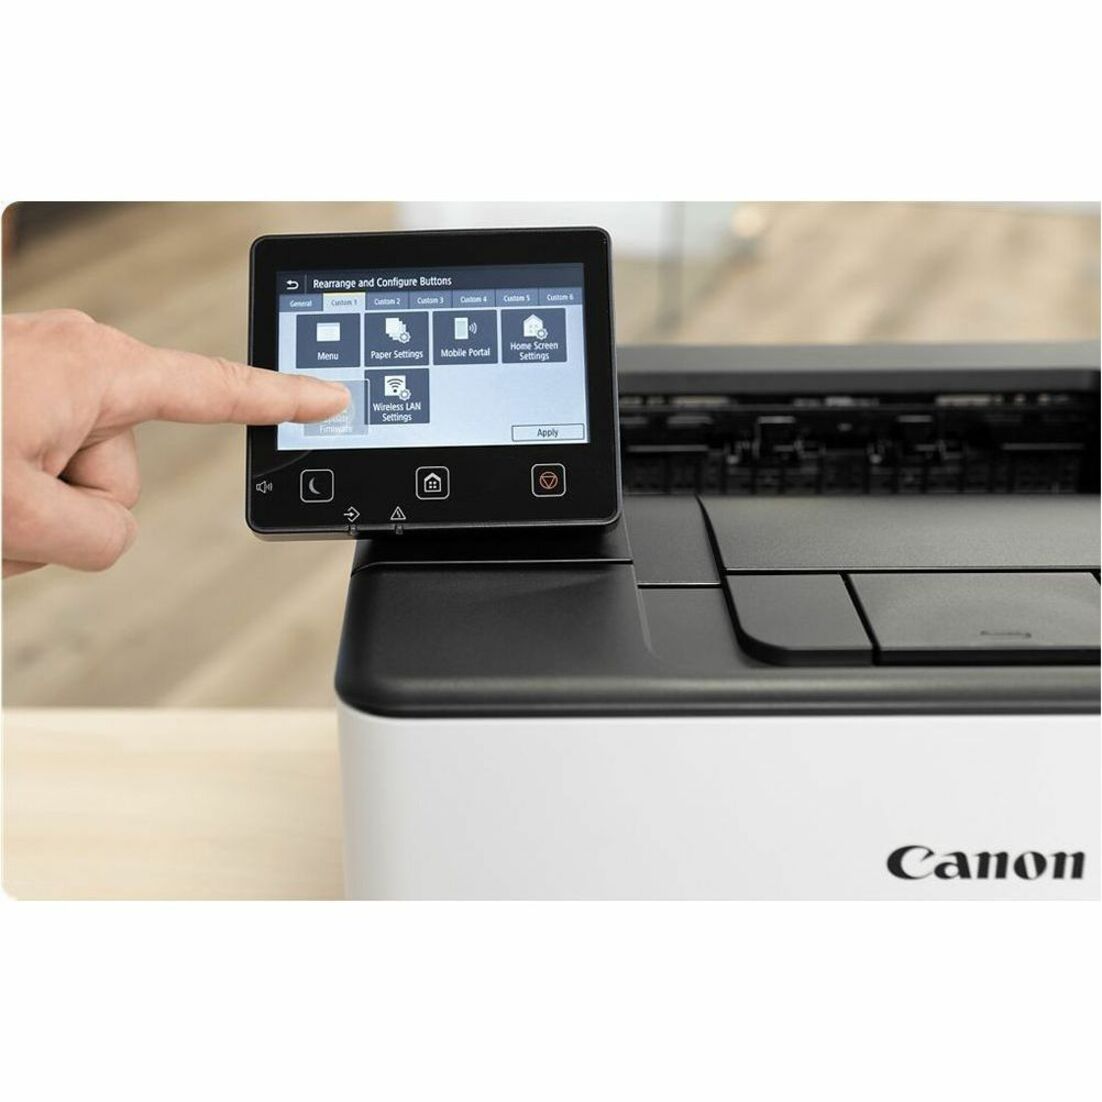 Canon 5952C004 imageCLASS LBP247DW Wireless Laser Printer, Monochrome, Duplex Printing